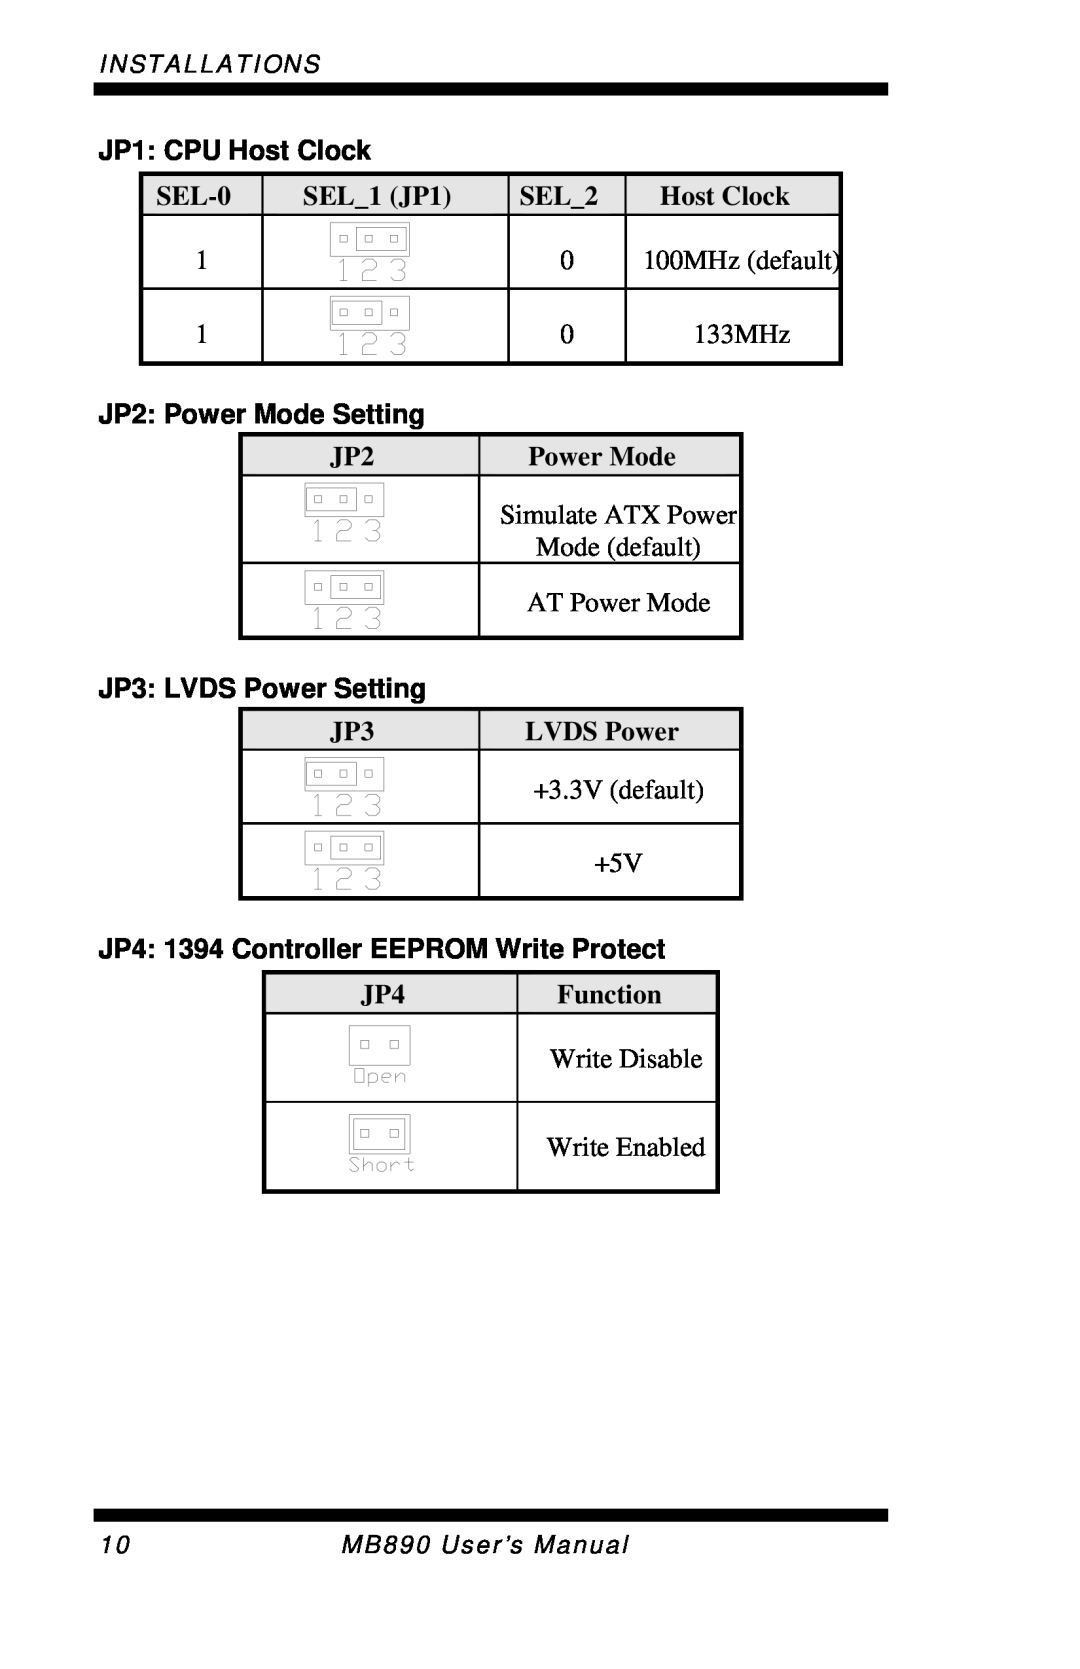 Intel MB890 JP1 CPU Host Clock, JP2 Power Mode Setting, JP3 LVDS Power Setting, JP4 1394 Controller EEPROM Write Protect 